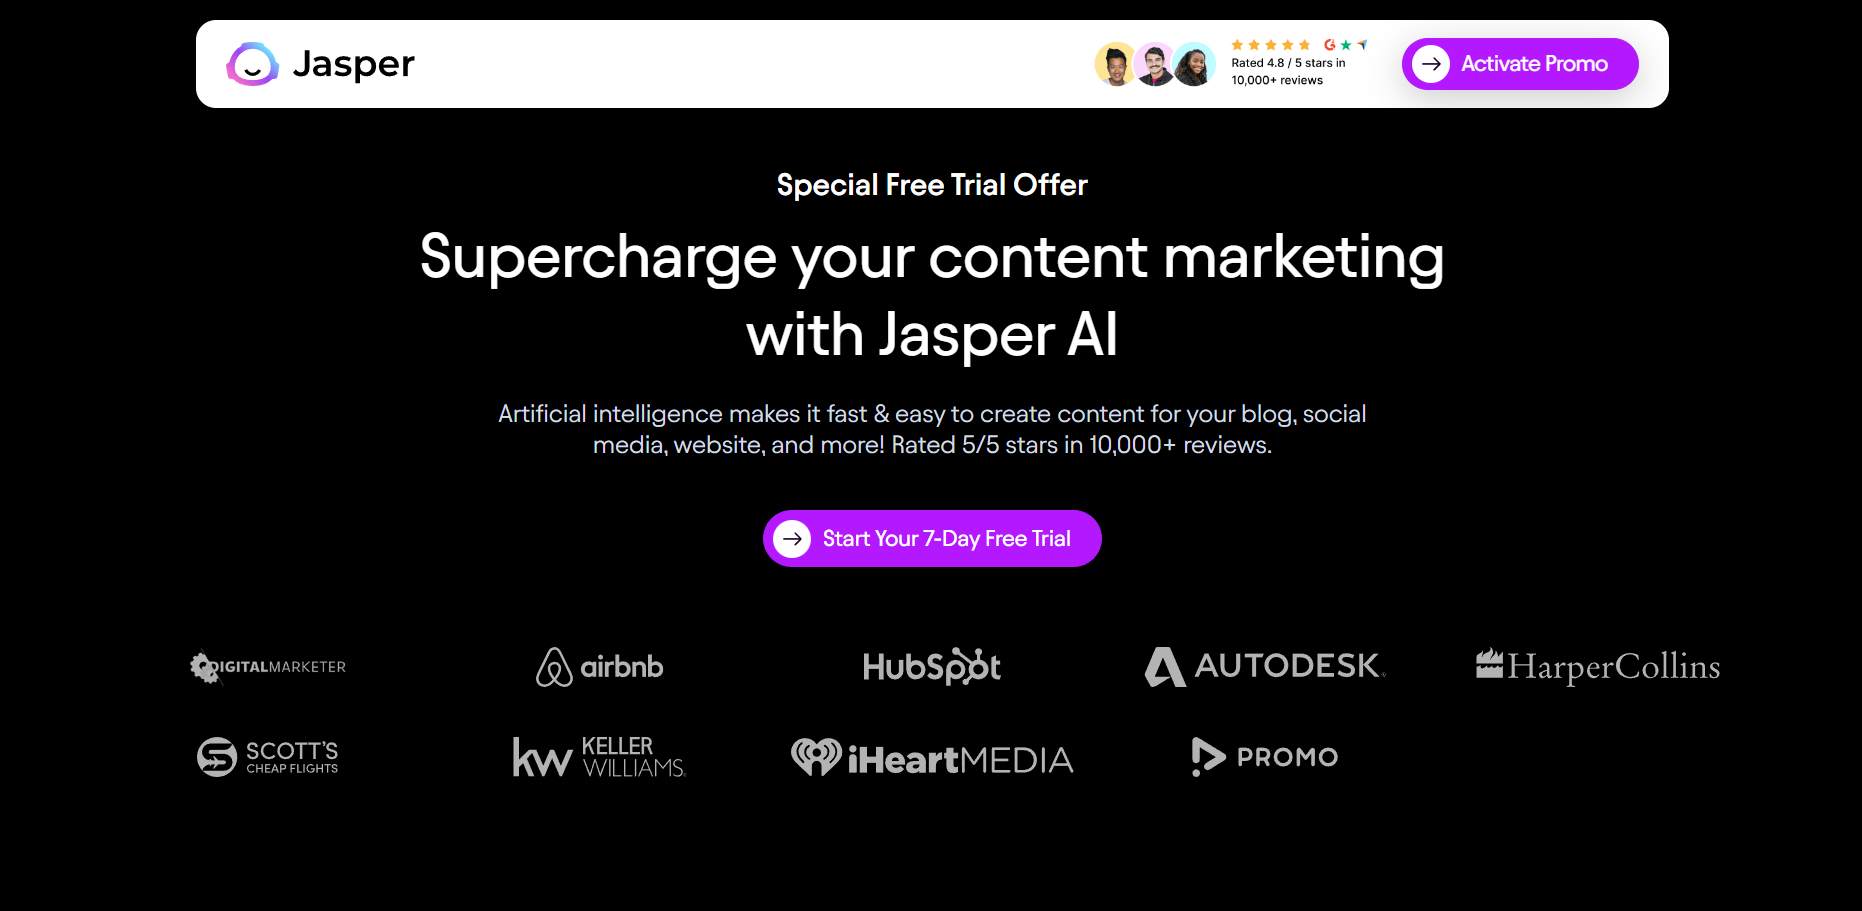 Jasper Homepage